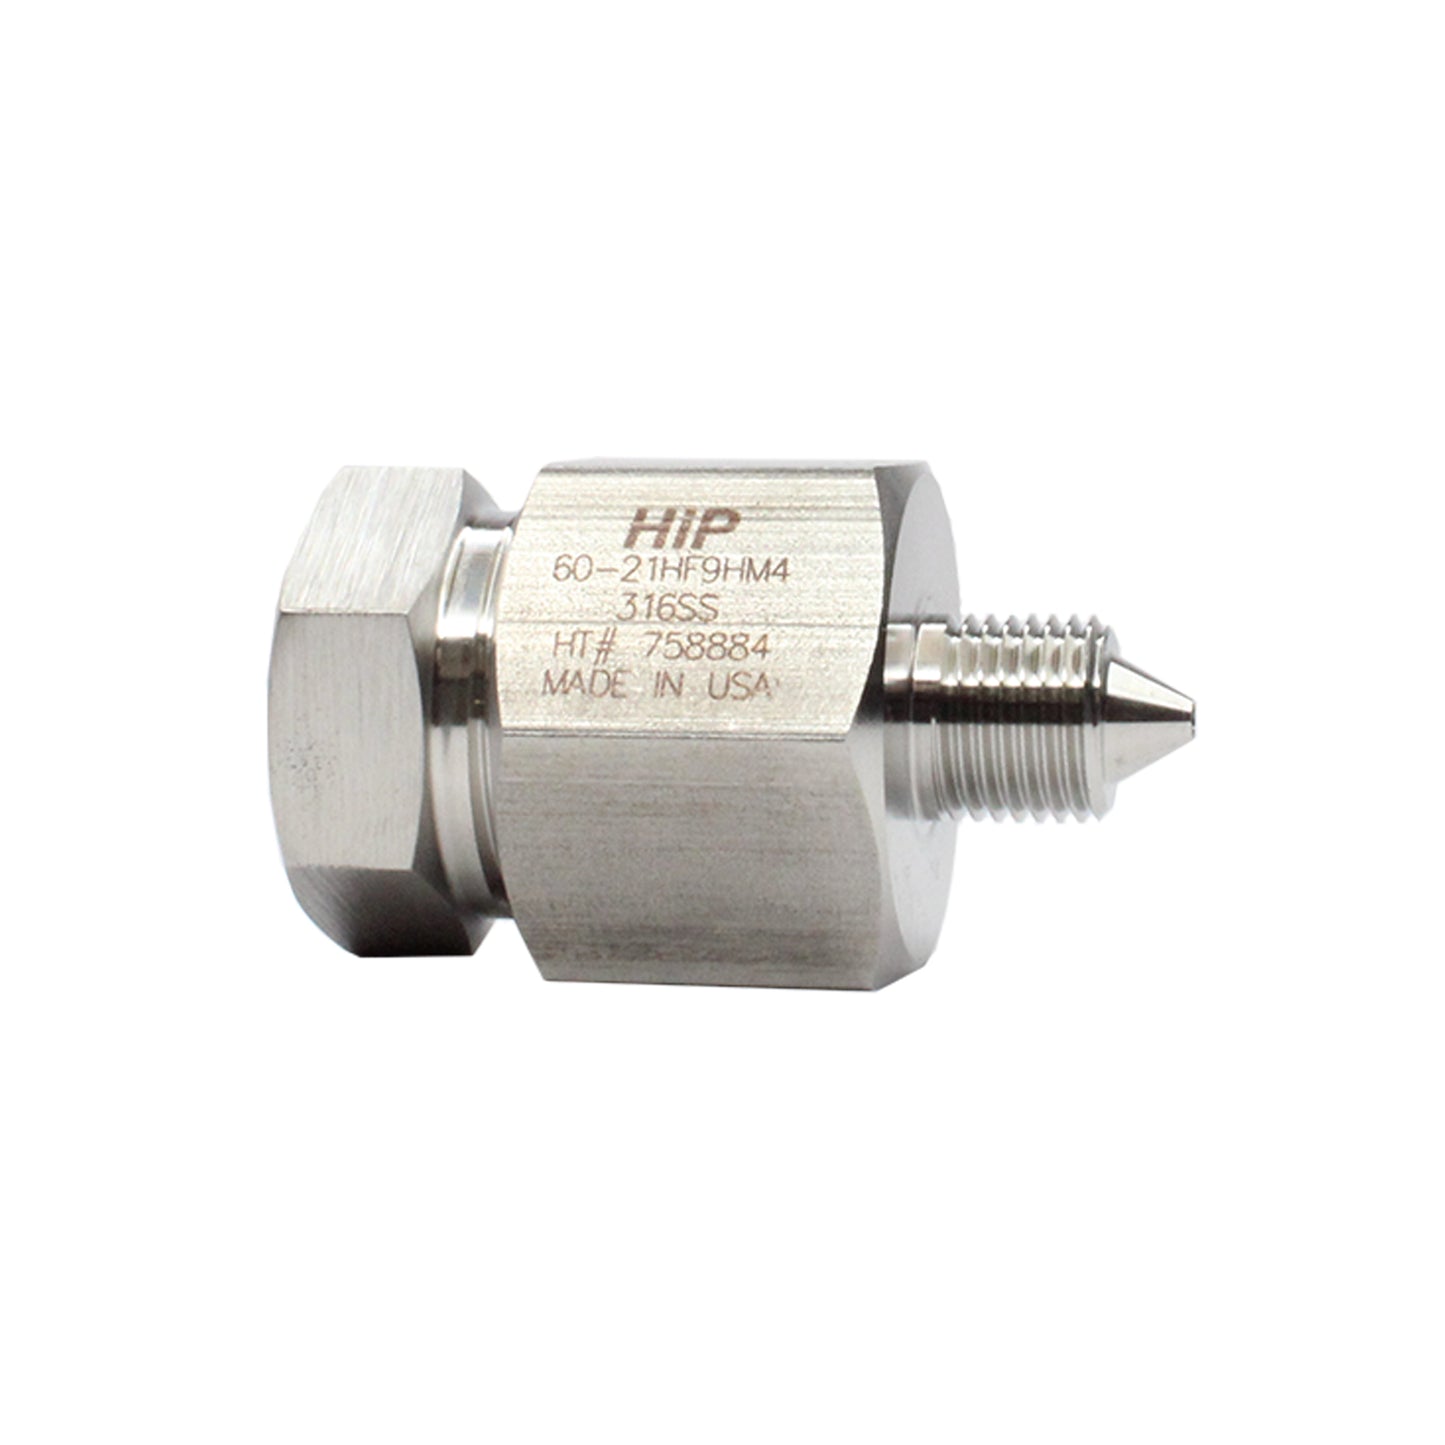 HiP 60-21HF9HM4 Adapter Female High Pressure to Male High Pressure